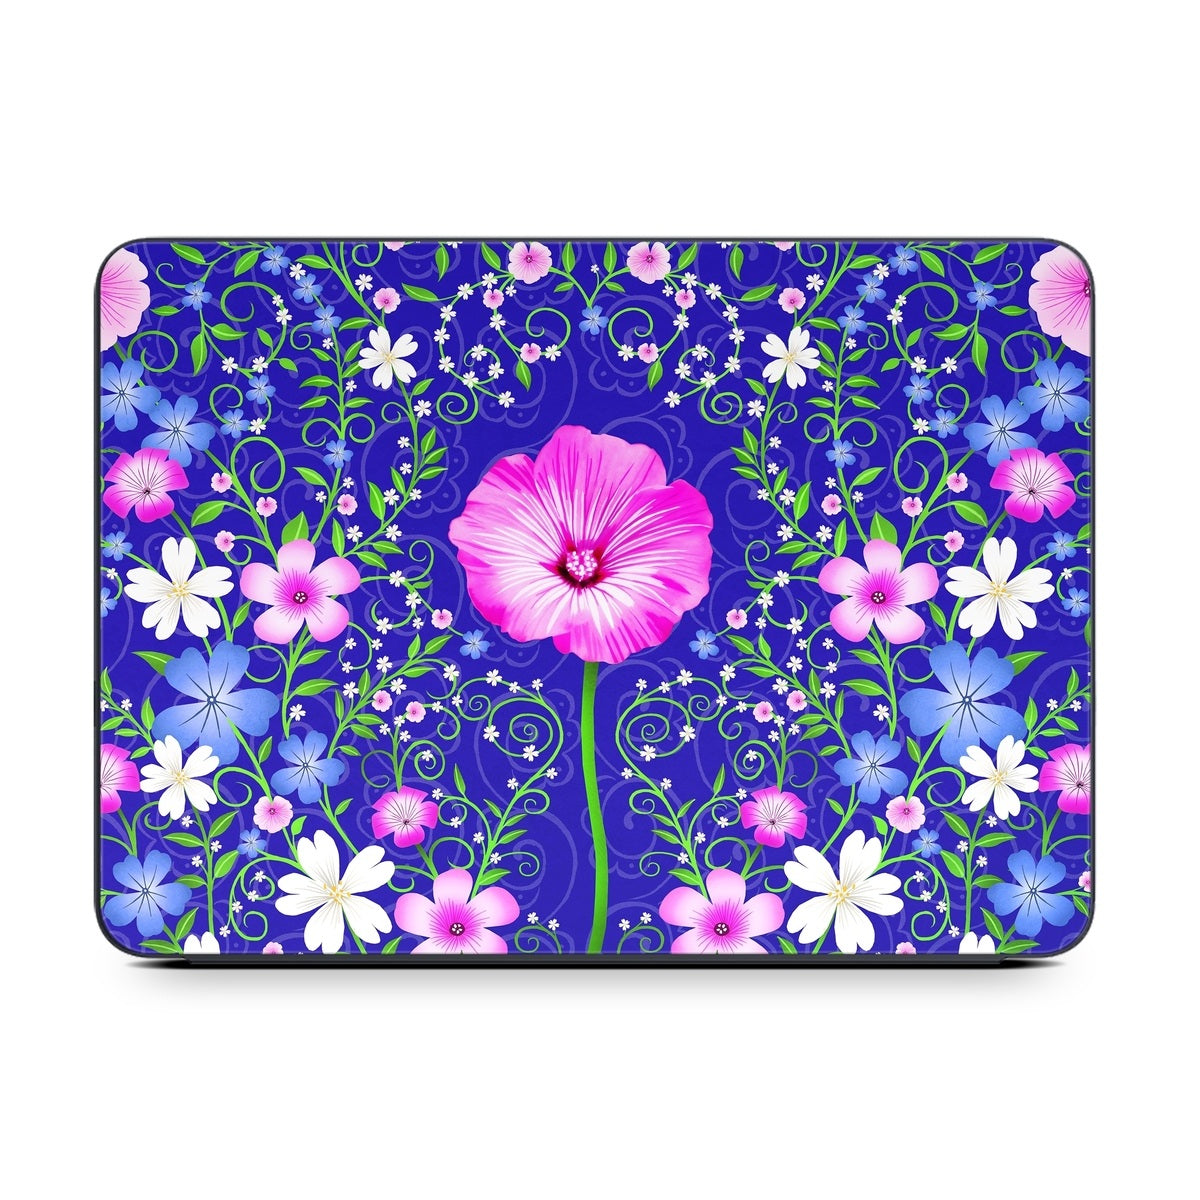 Floral Harmony - Apple Smart Keyboard Folio Skin